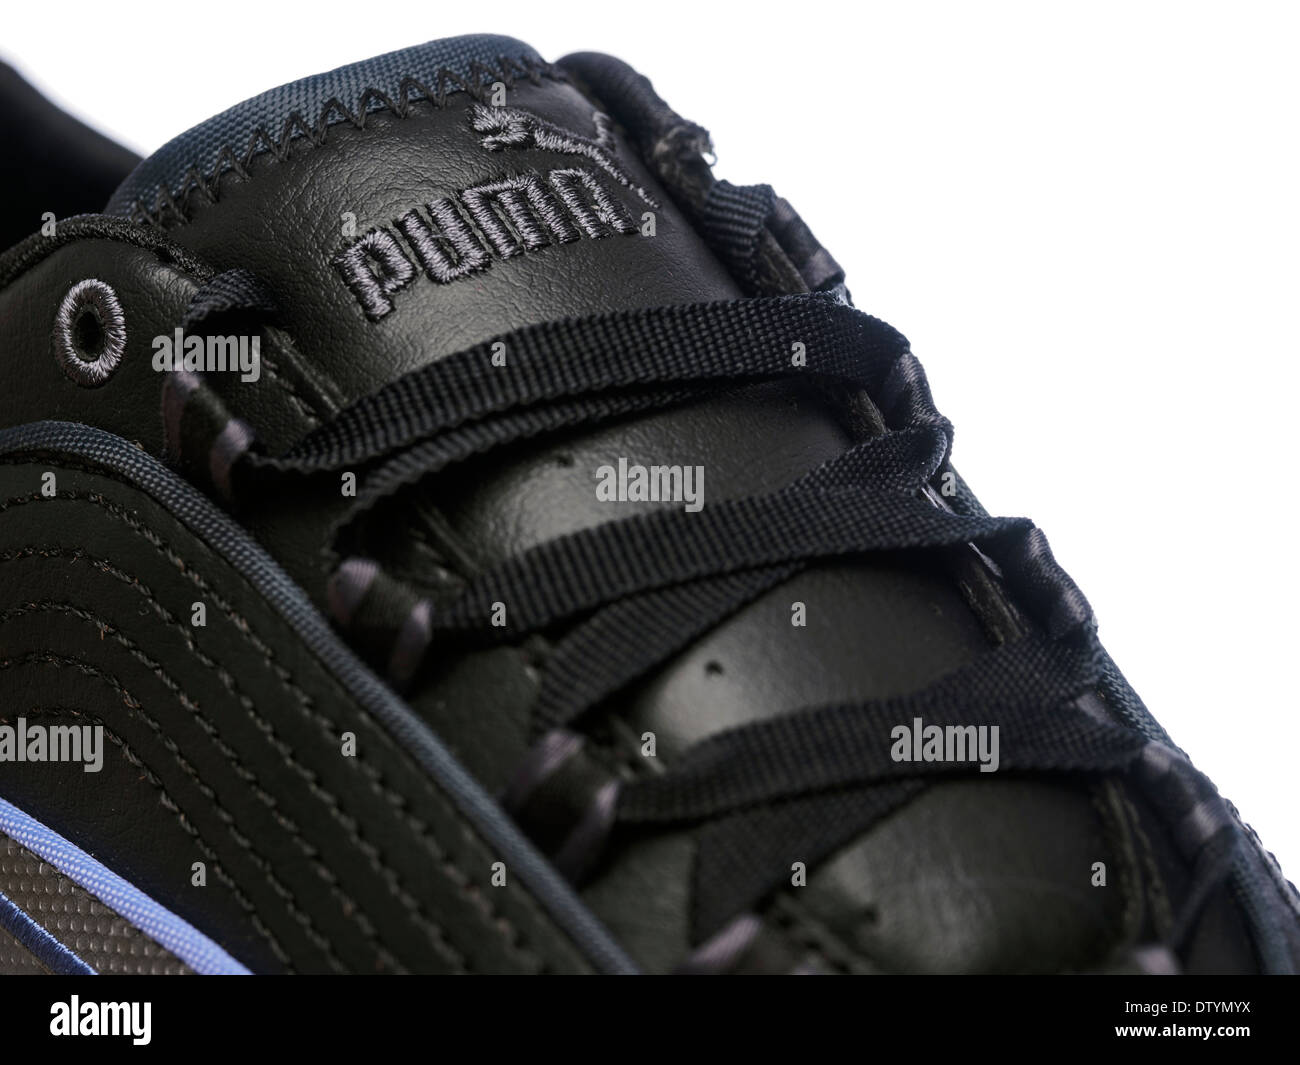 Black leather Puma fitness shoes Stock Photo - Alamy